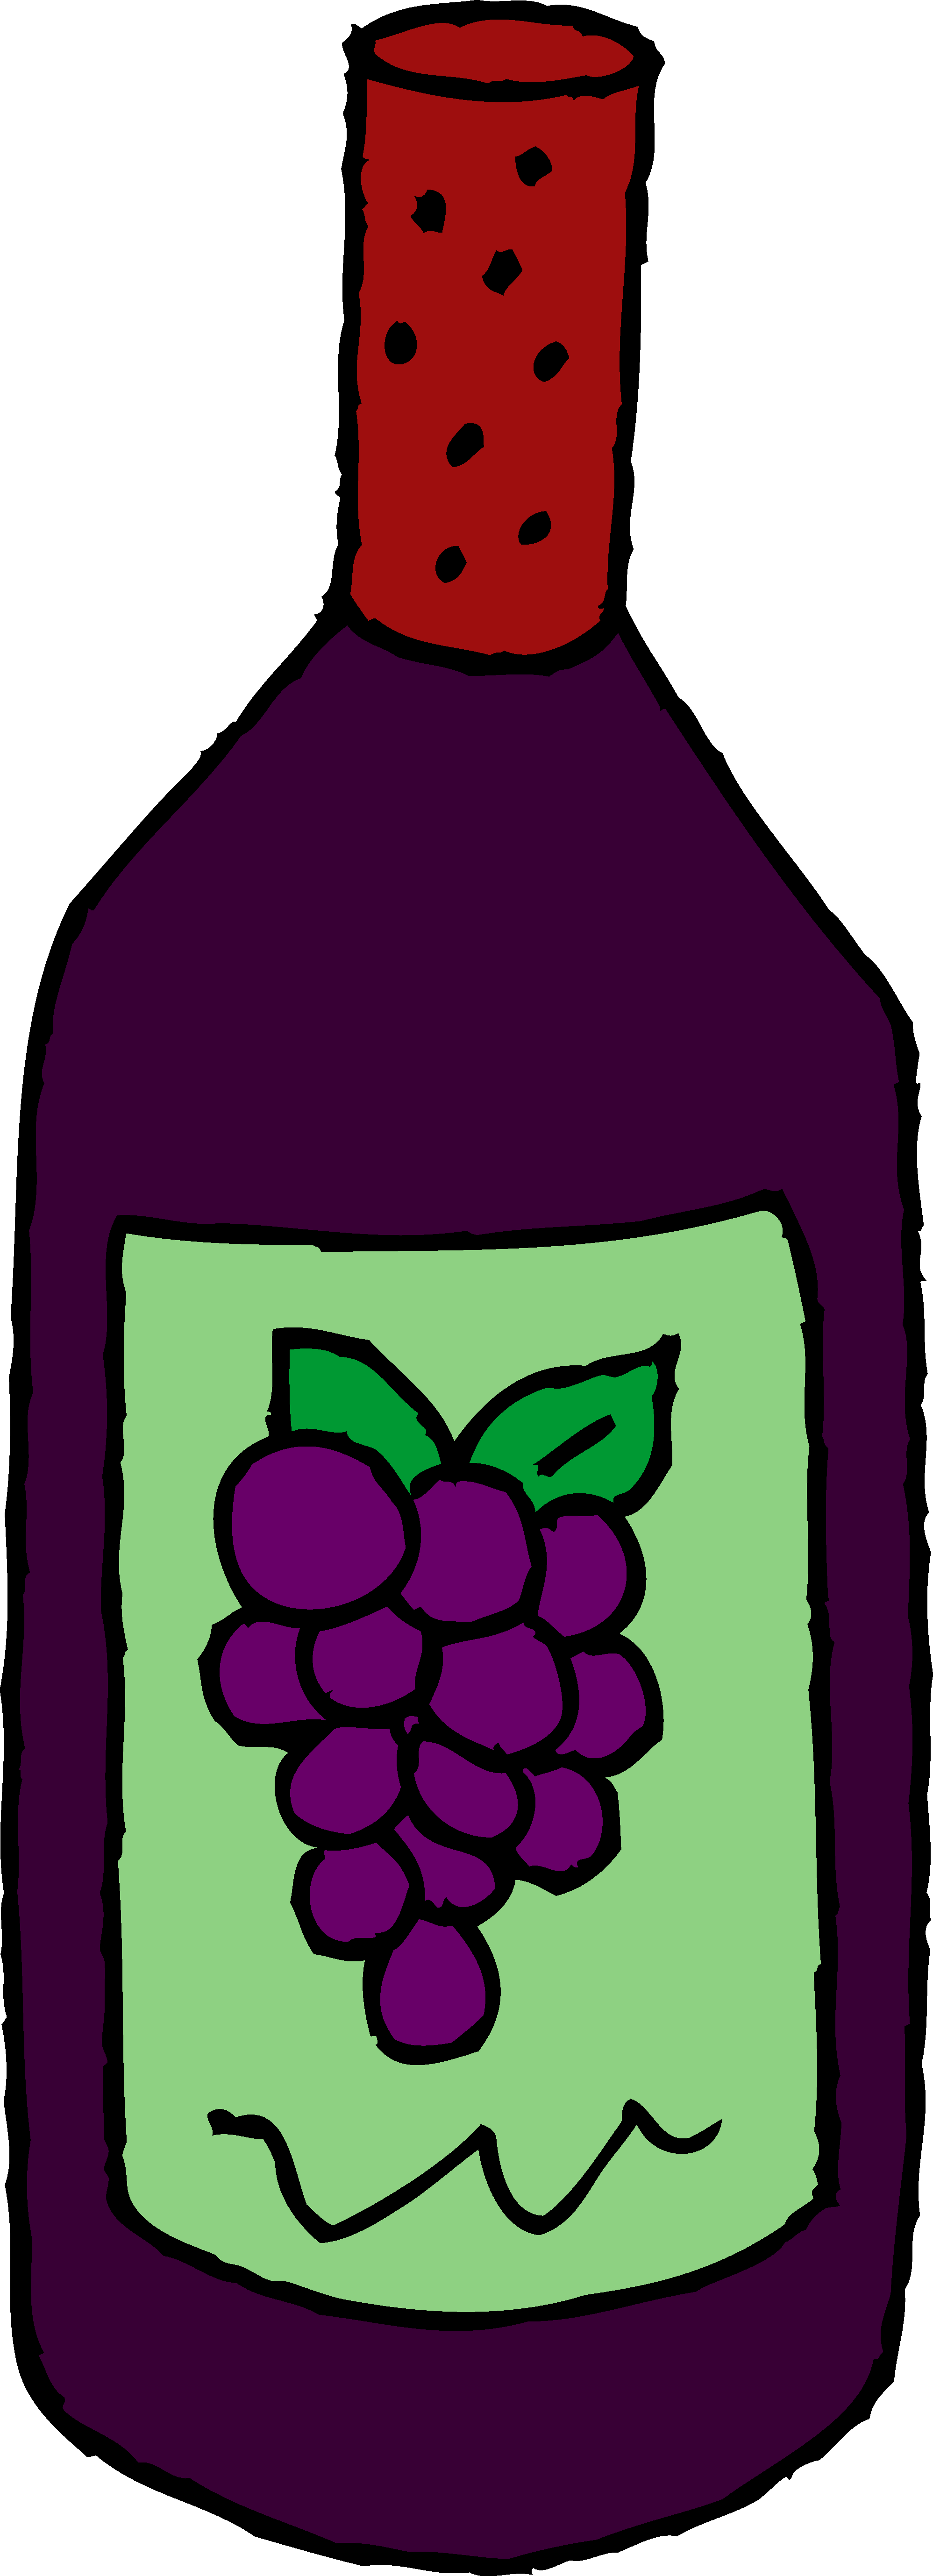 Clip art wine bottle.